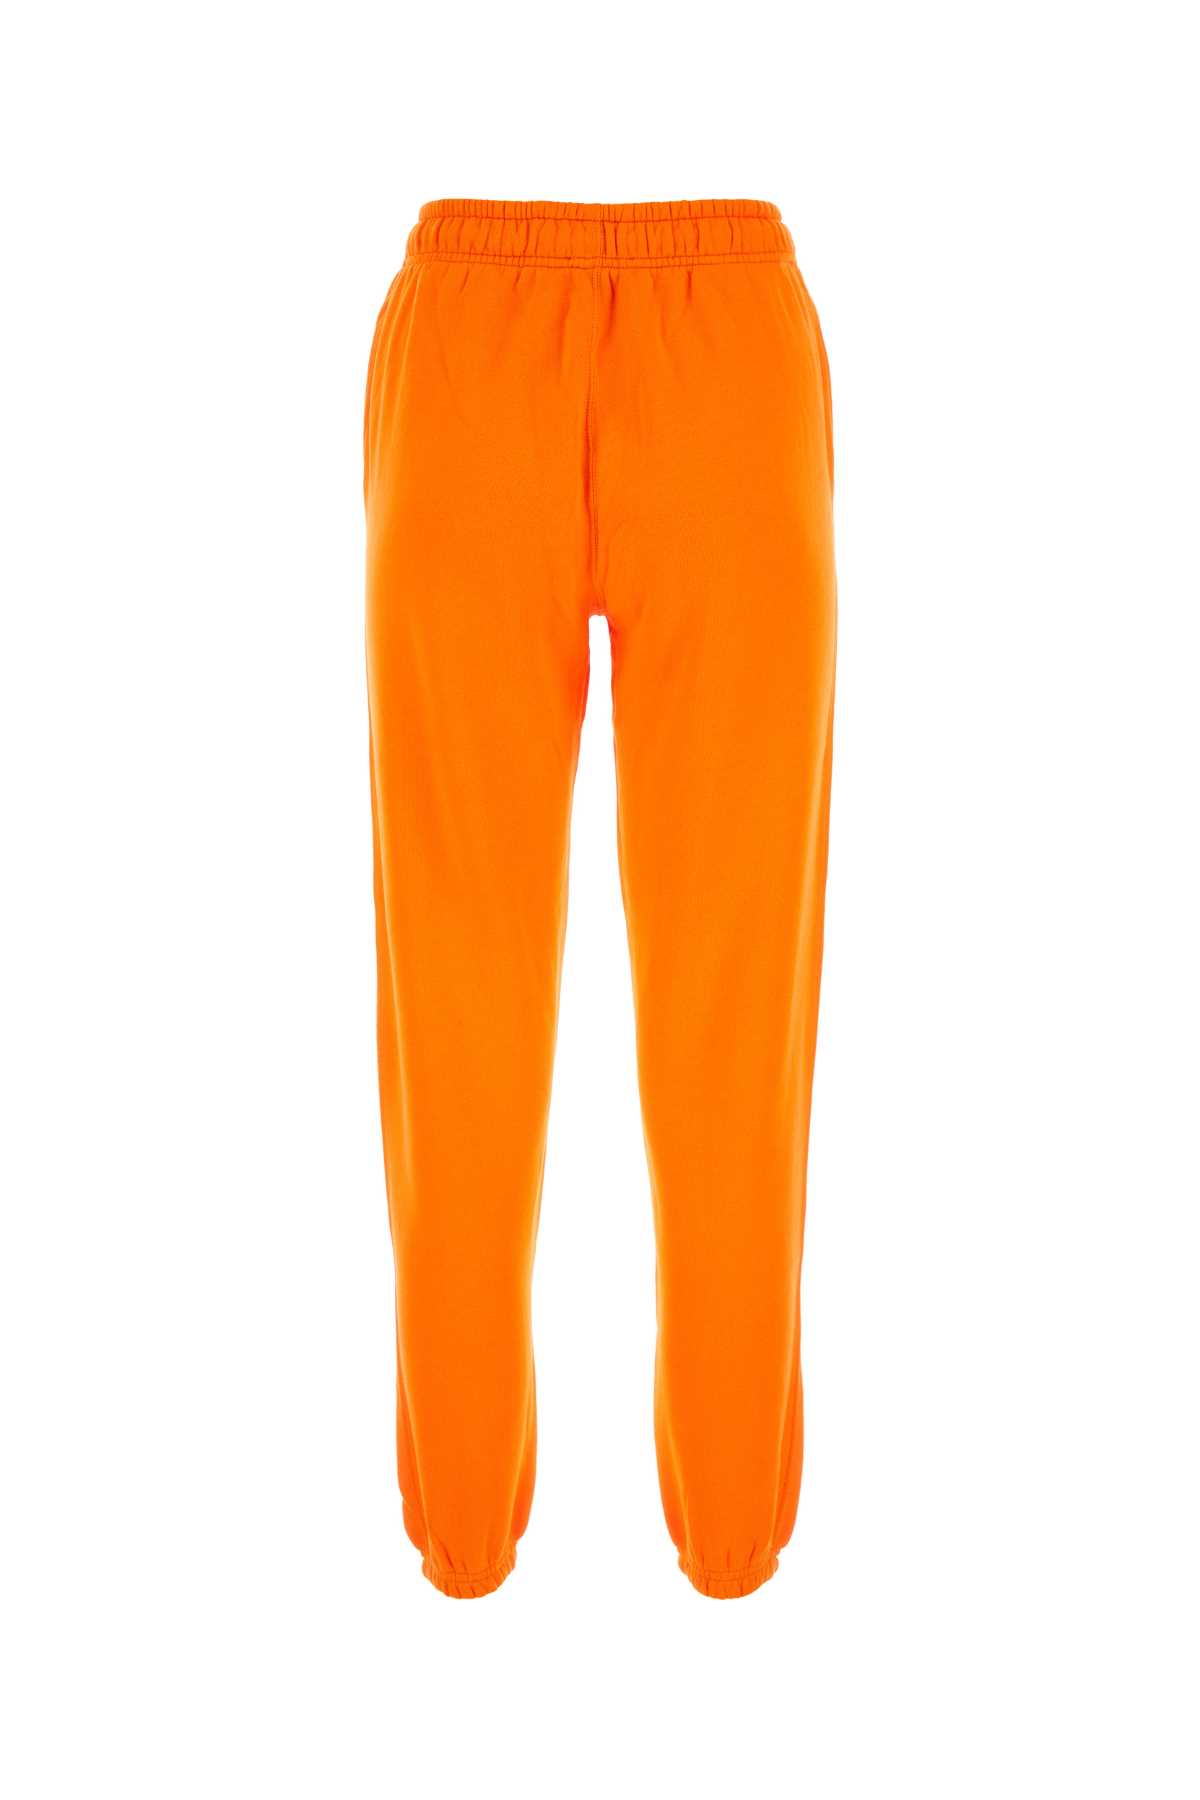 Polo Ralph Lauren Orange Cotton Blend Joggers In Solarorange